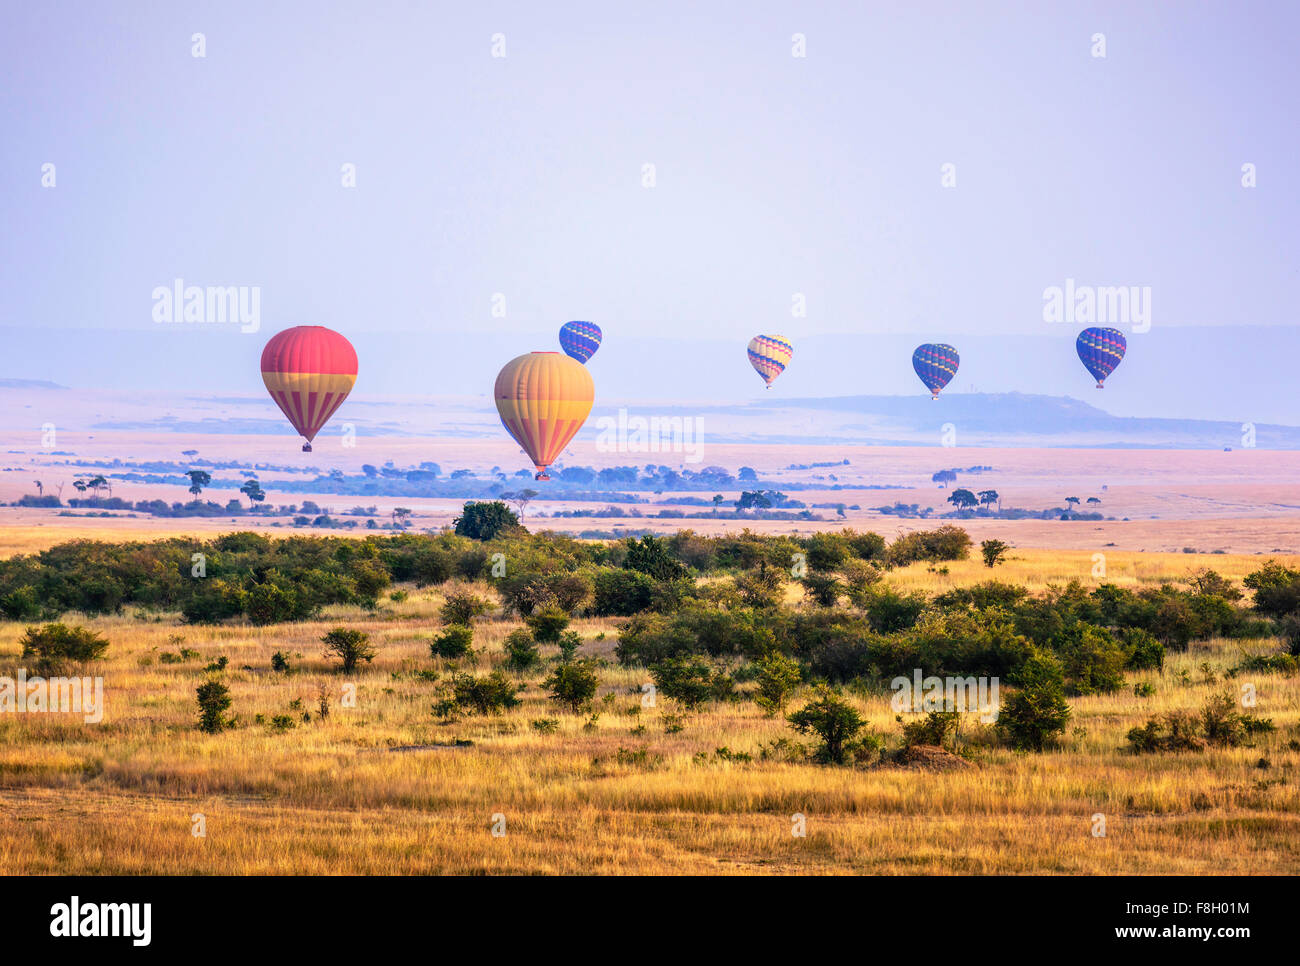 Hot air balloons flying over savanna landscape Stock Photo